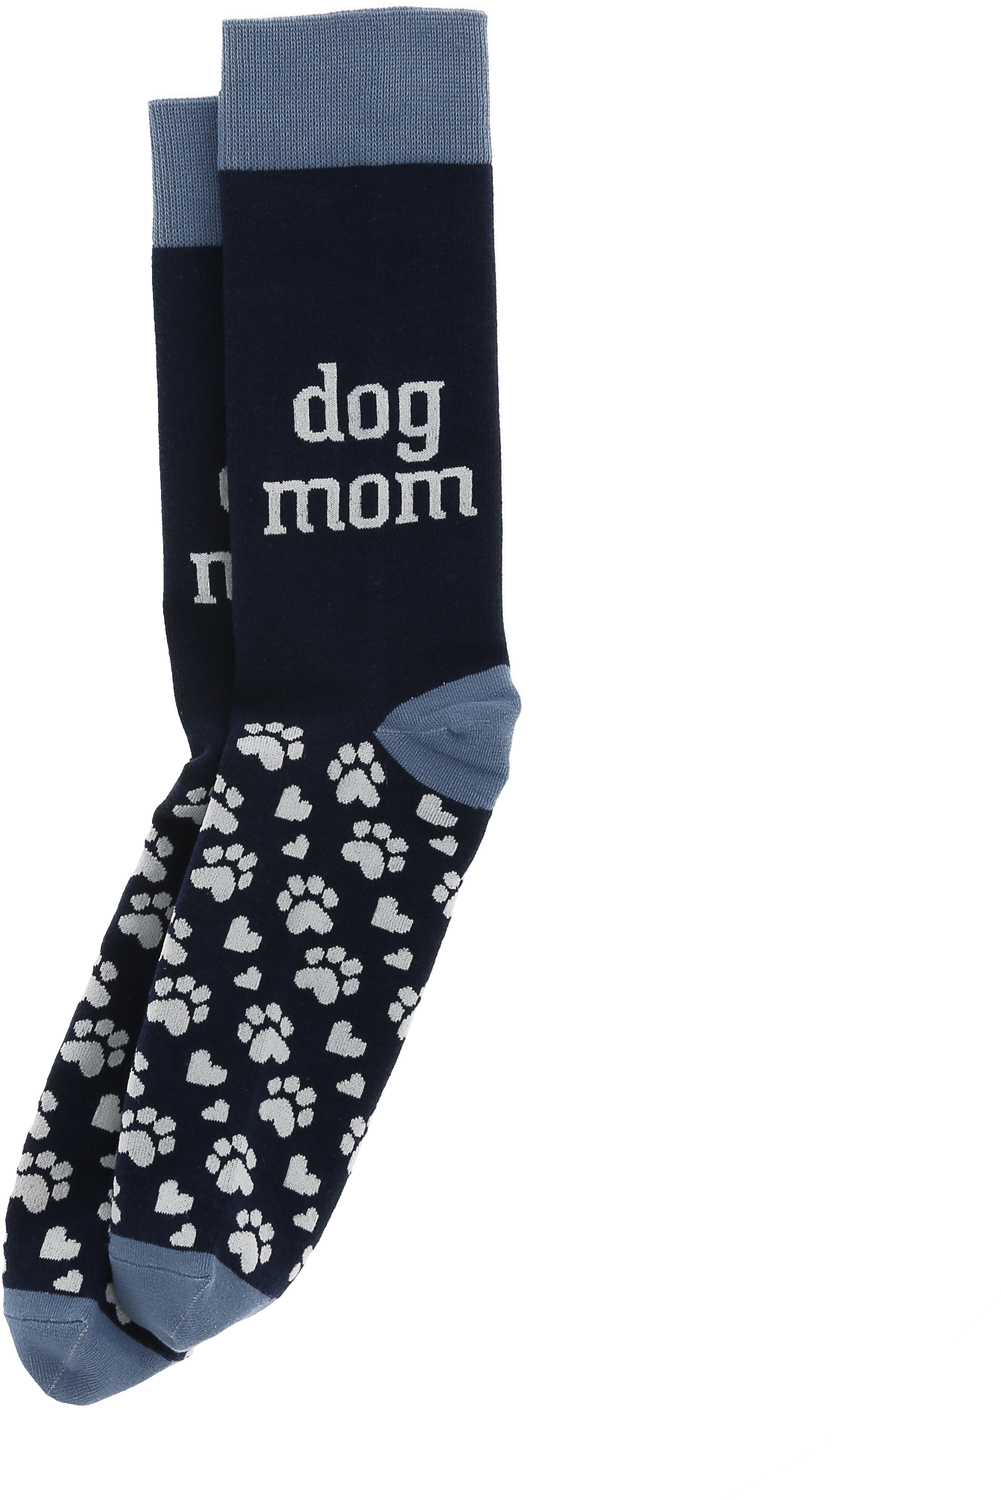 Dog Mom by We Pets - Dog Mom - Ladies Crew Socks